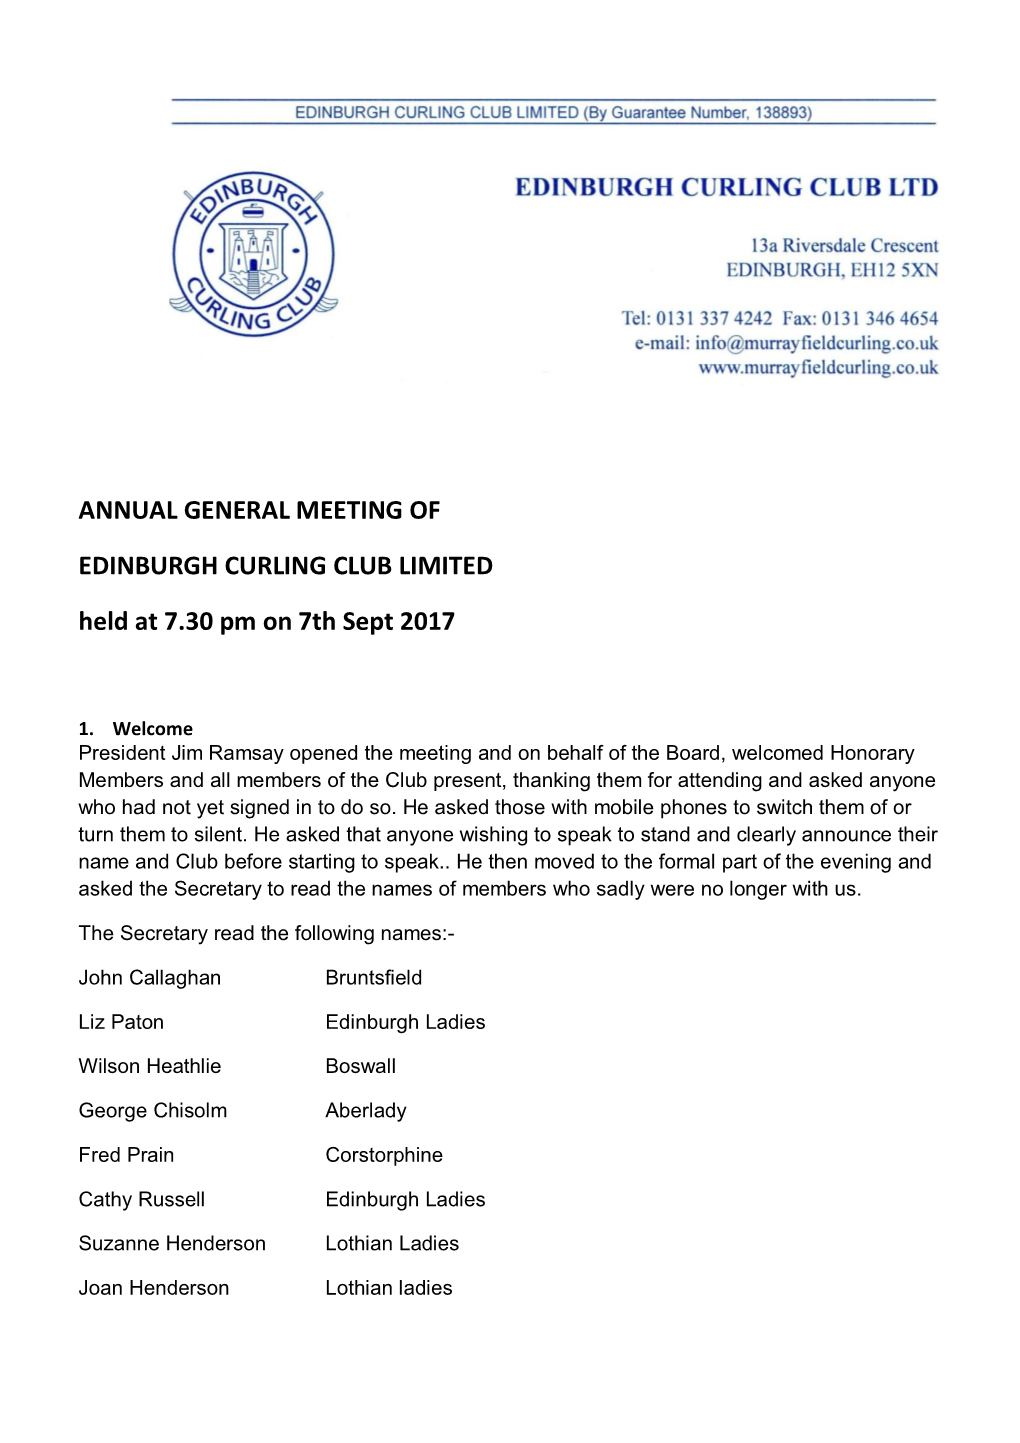 Annual General Meeting of Edinburgh Curling Club